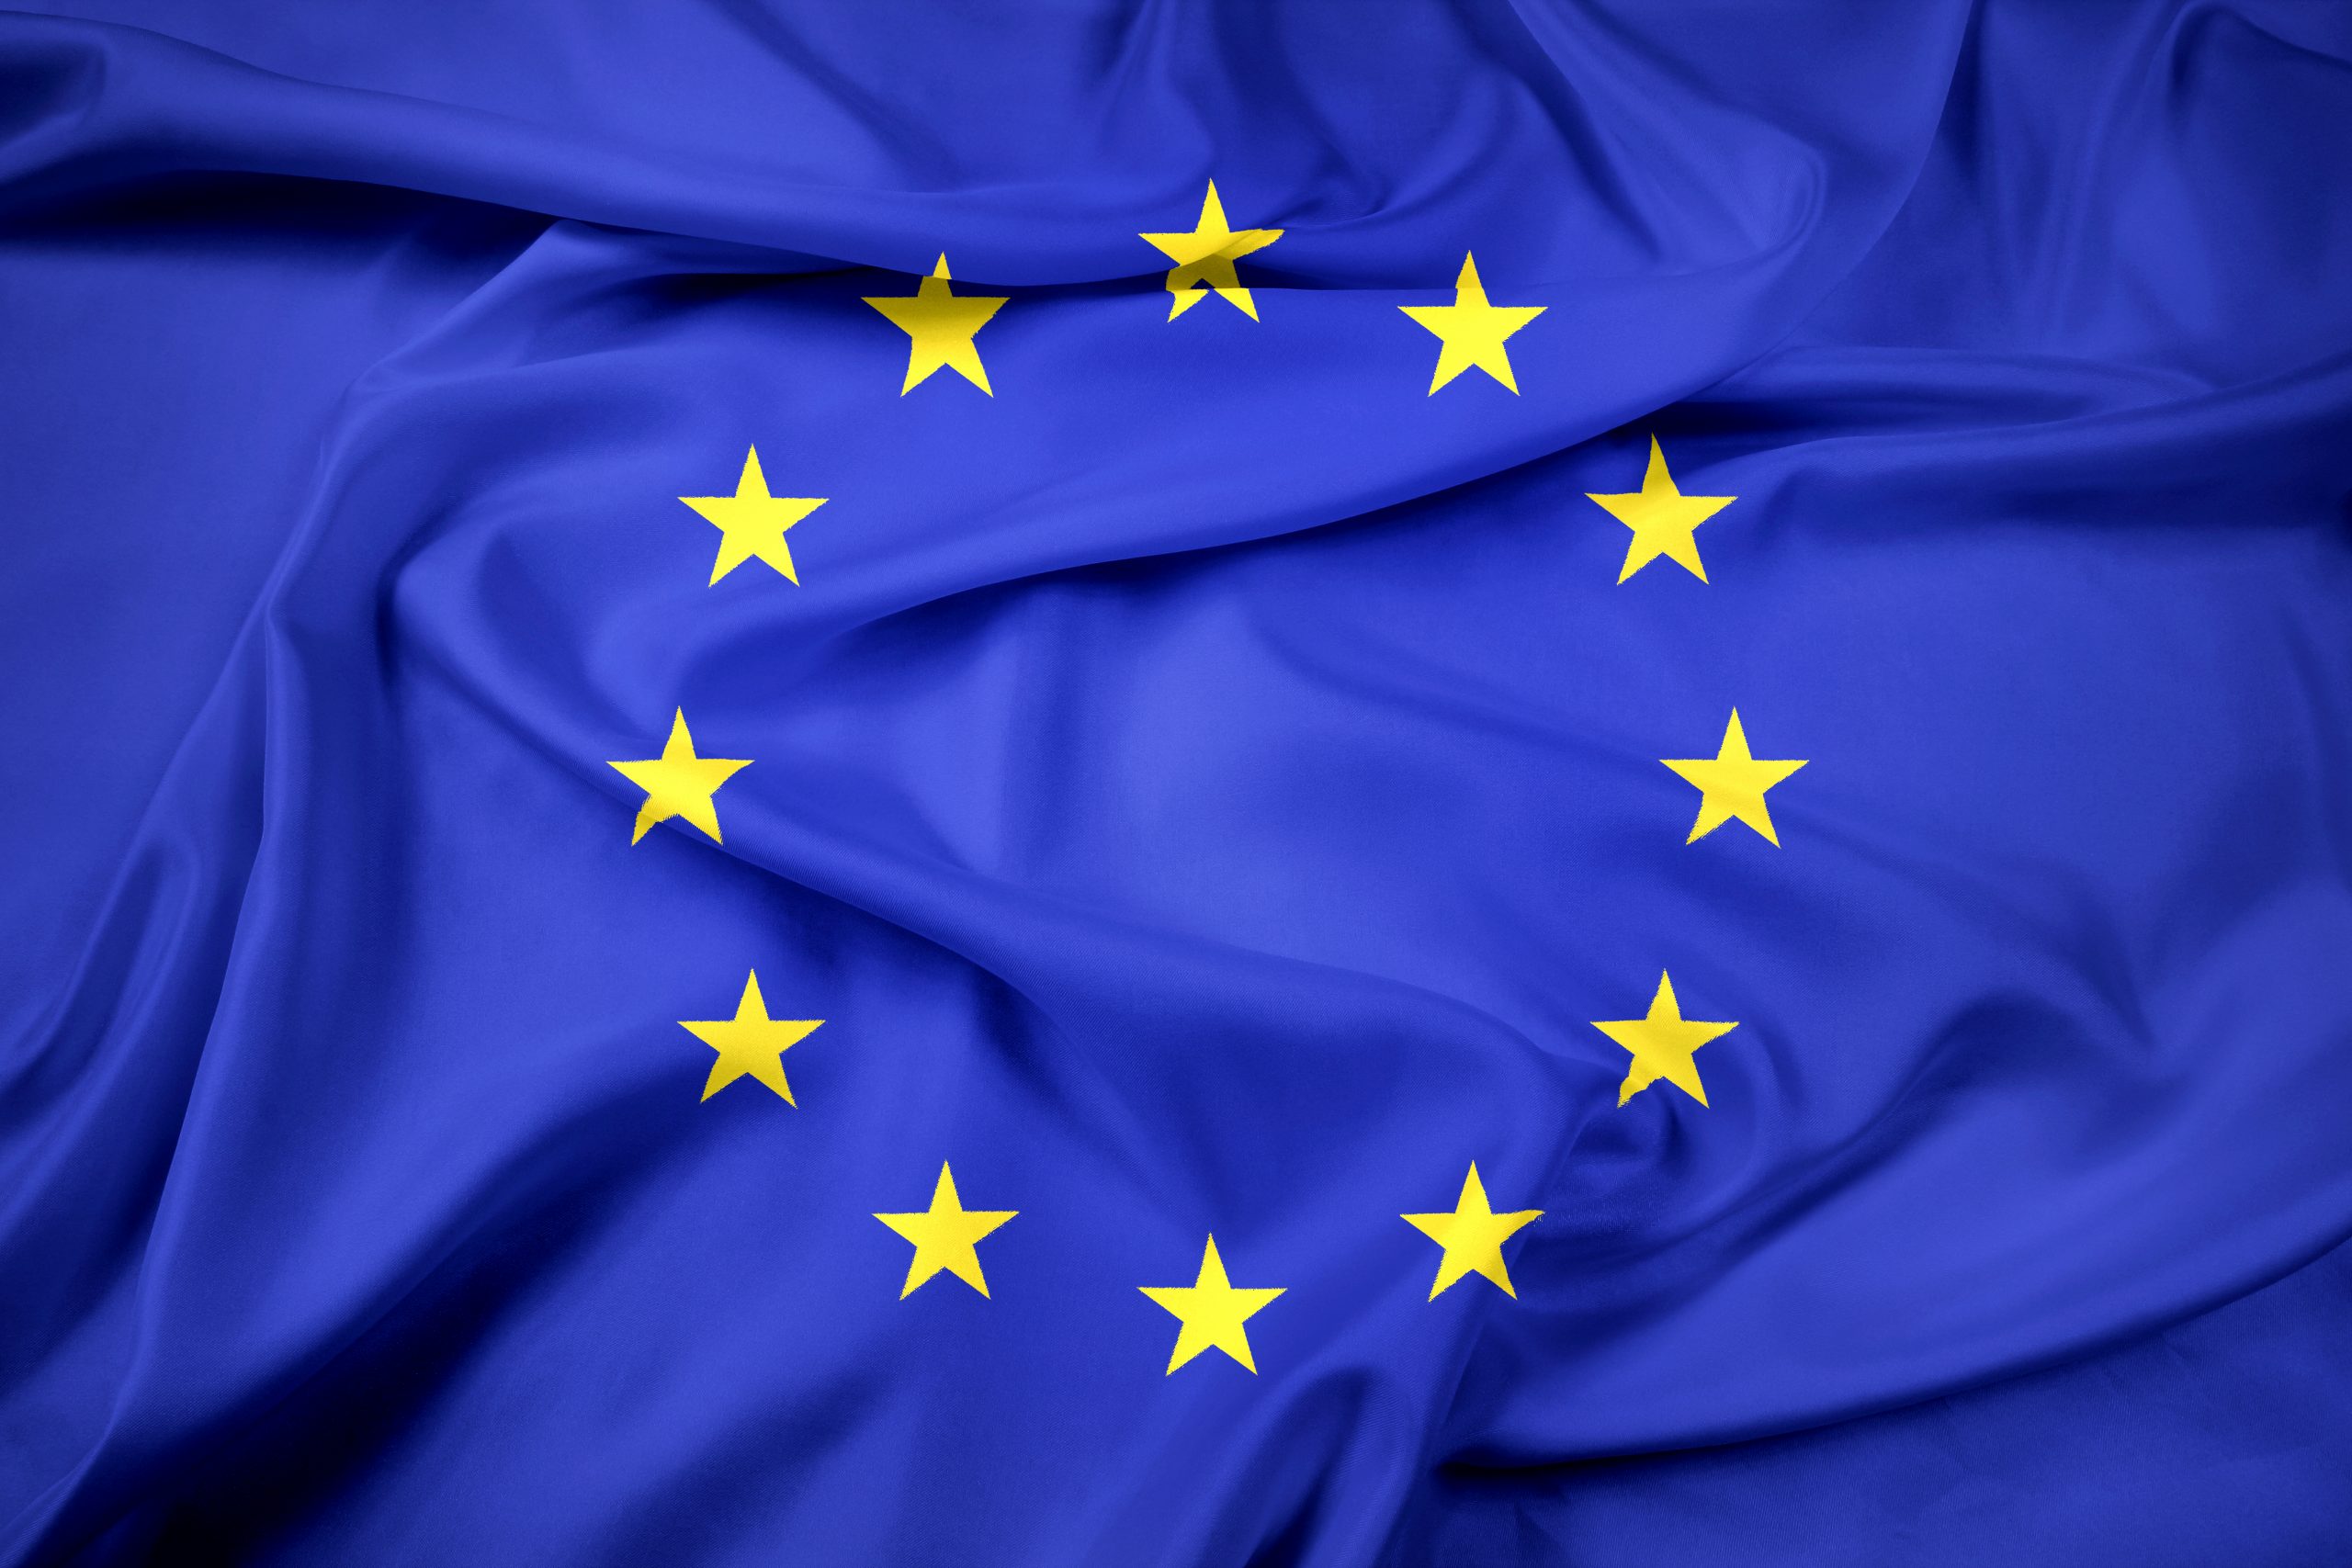 Eu u. Флаг европейского Союза. ЕС Европейский Союз. Европейский Союз (Евросоюз). Европейский Союз 1958.